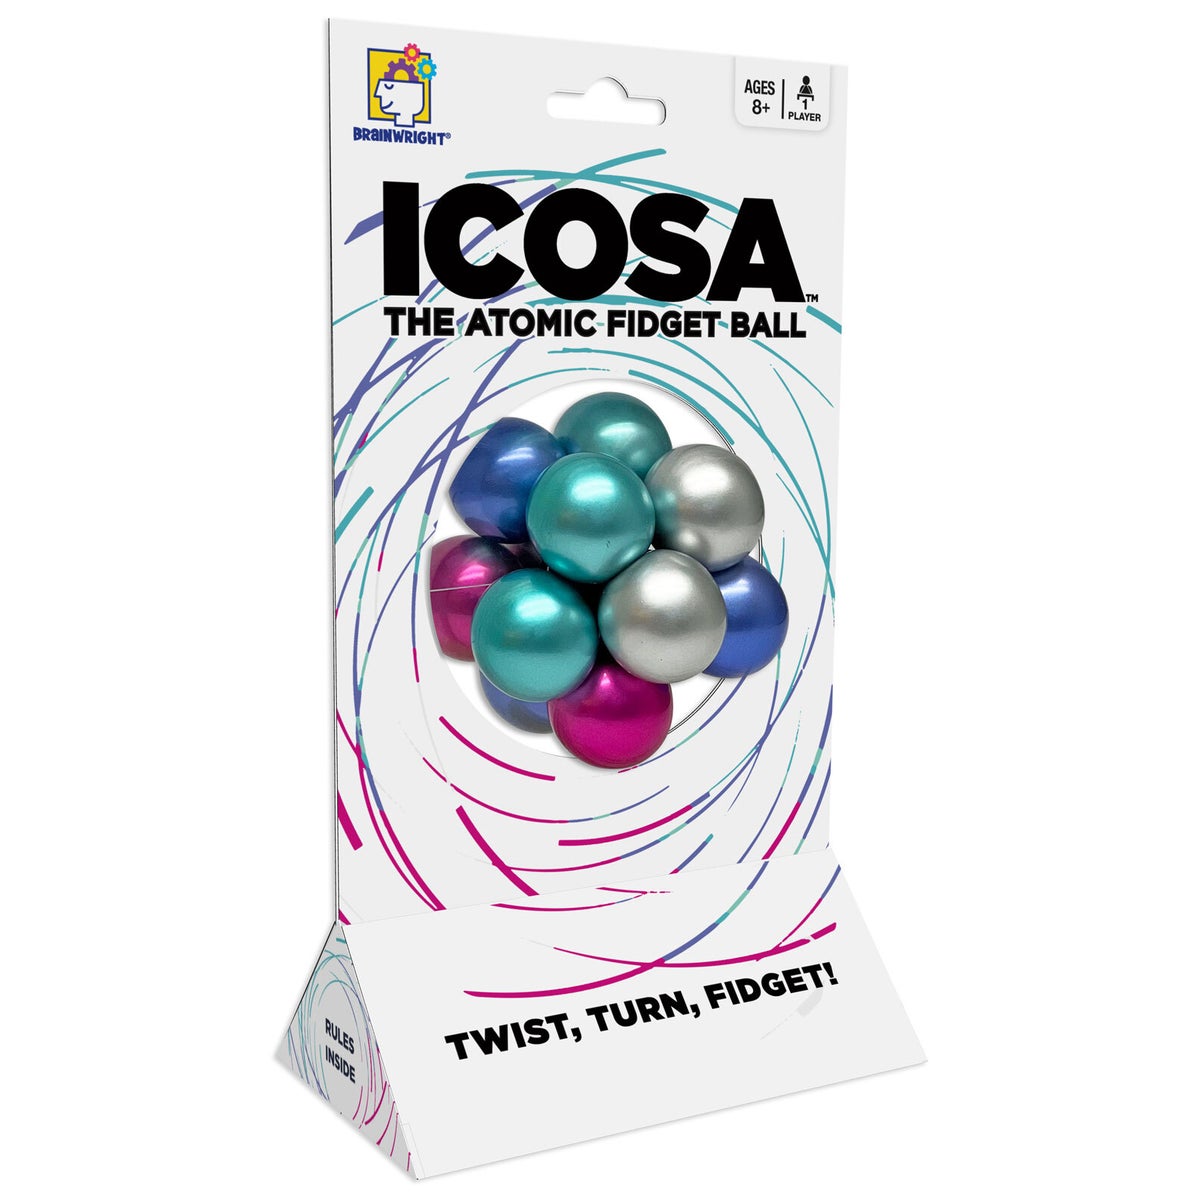 ICOSO - ICE (4) ENG